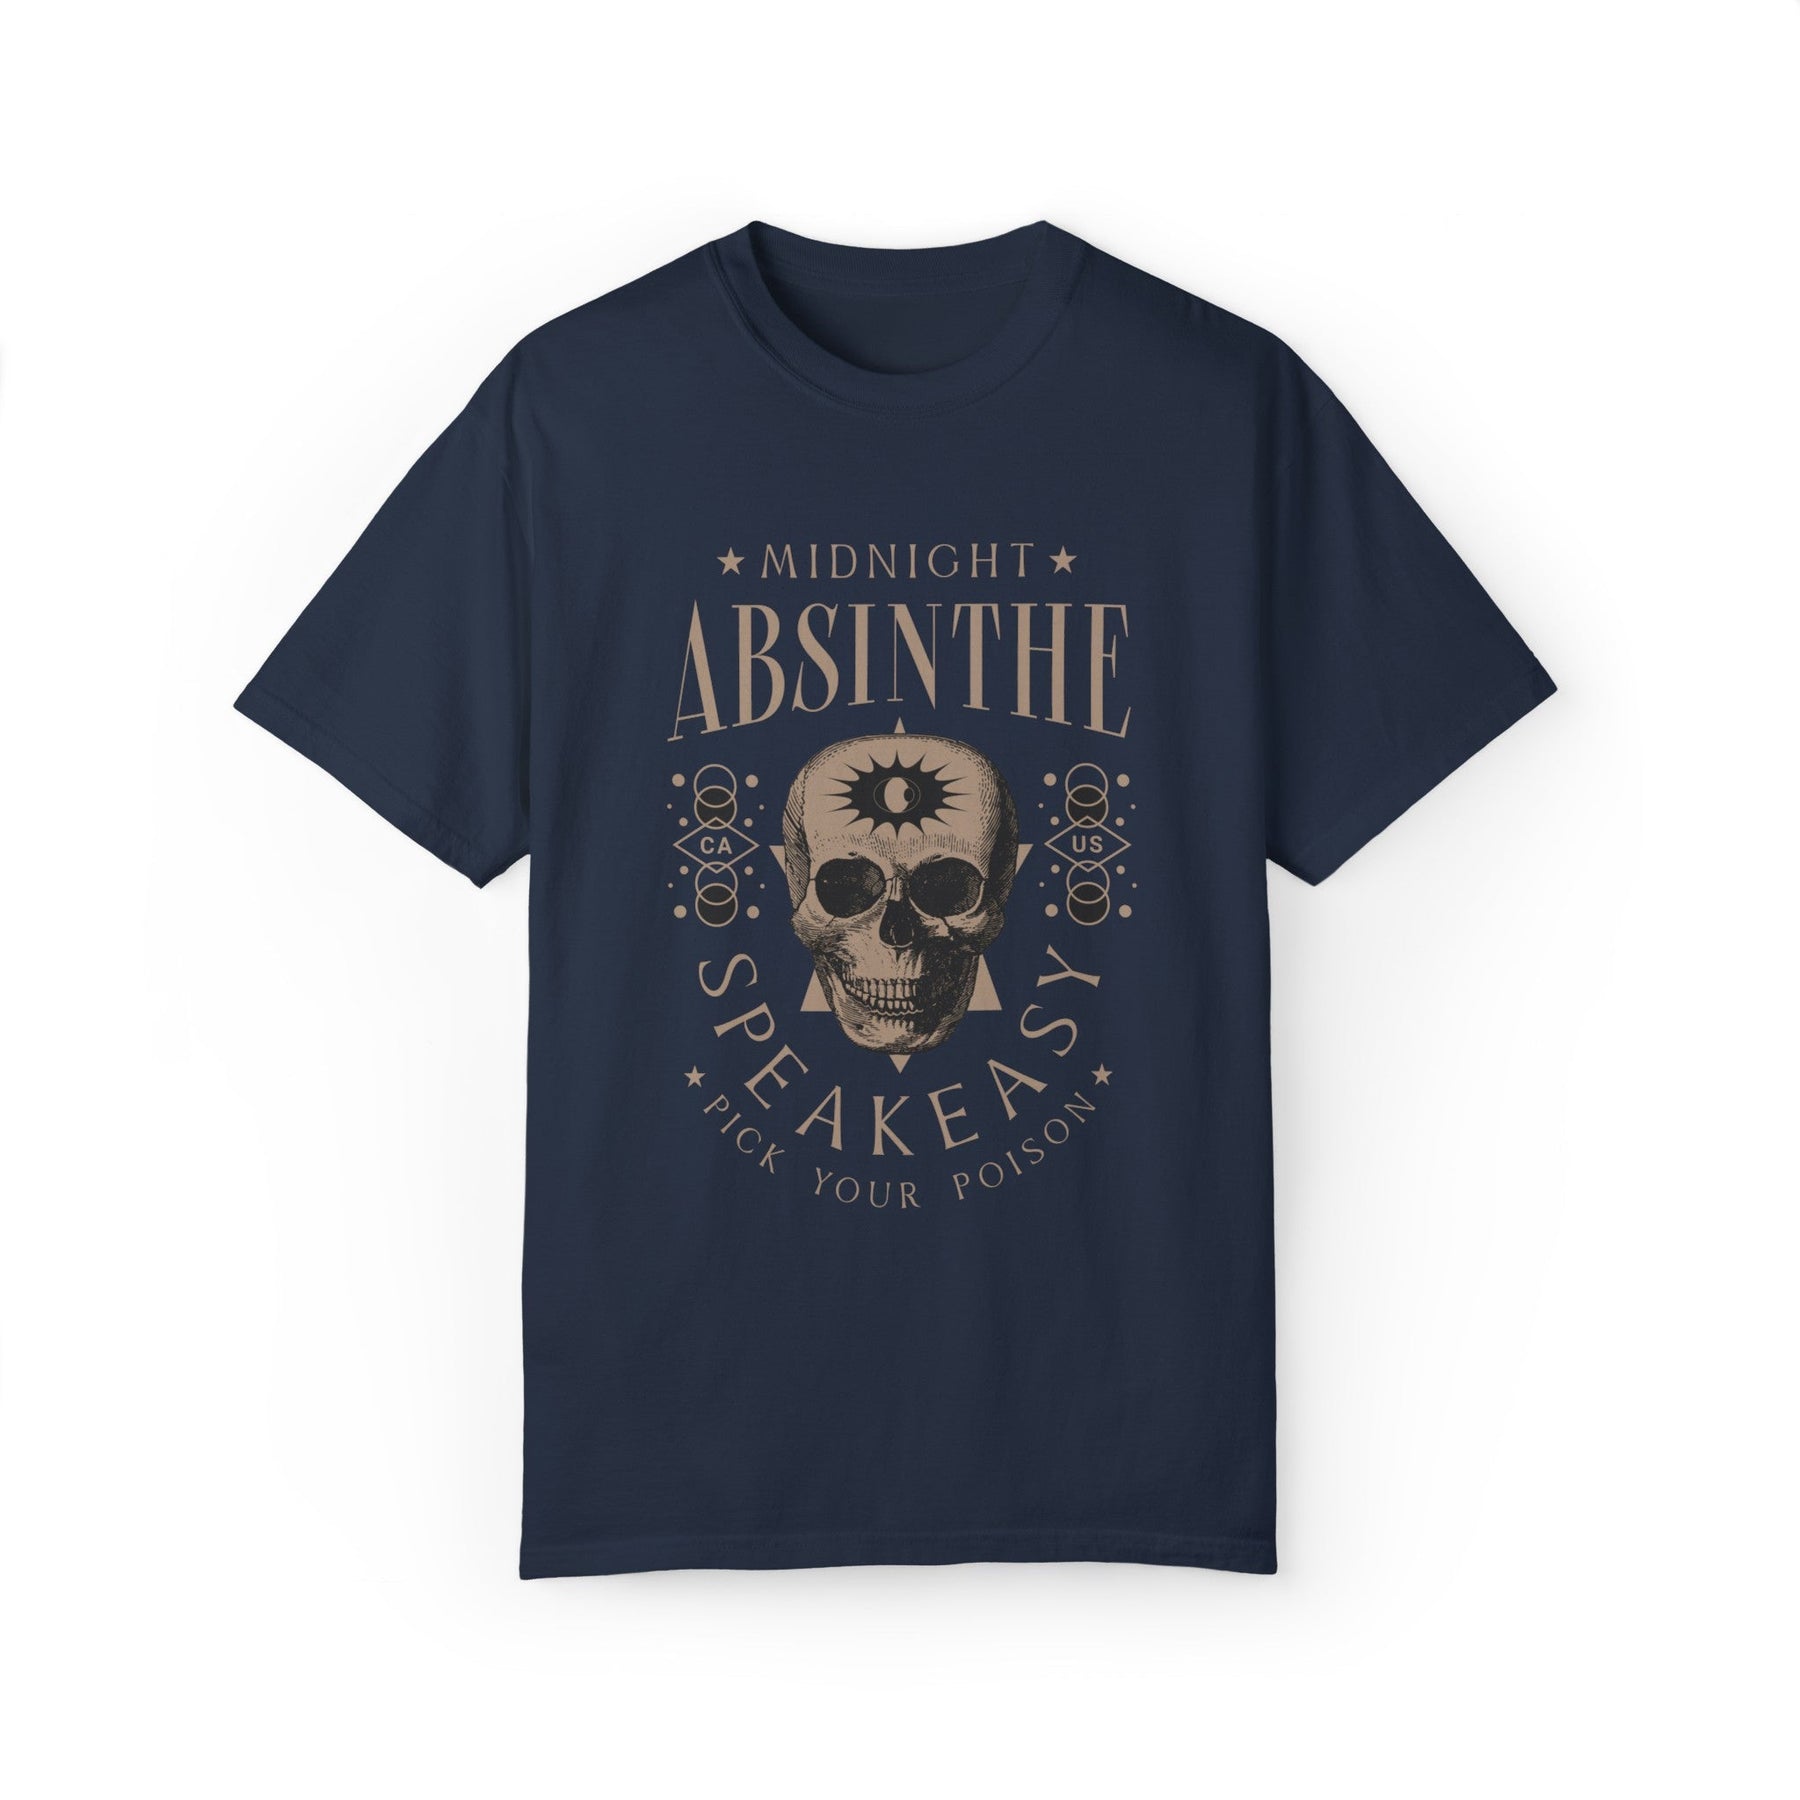 Midnight Absinthe Oversized Beefy Tee - Goth Cloth Co.T - Shirt30349925668388466806